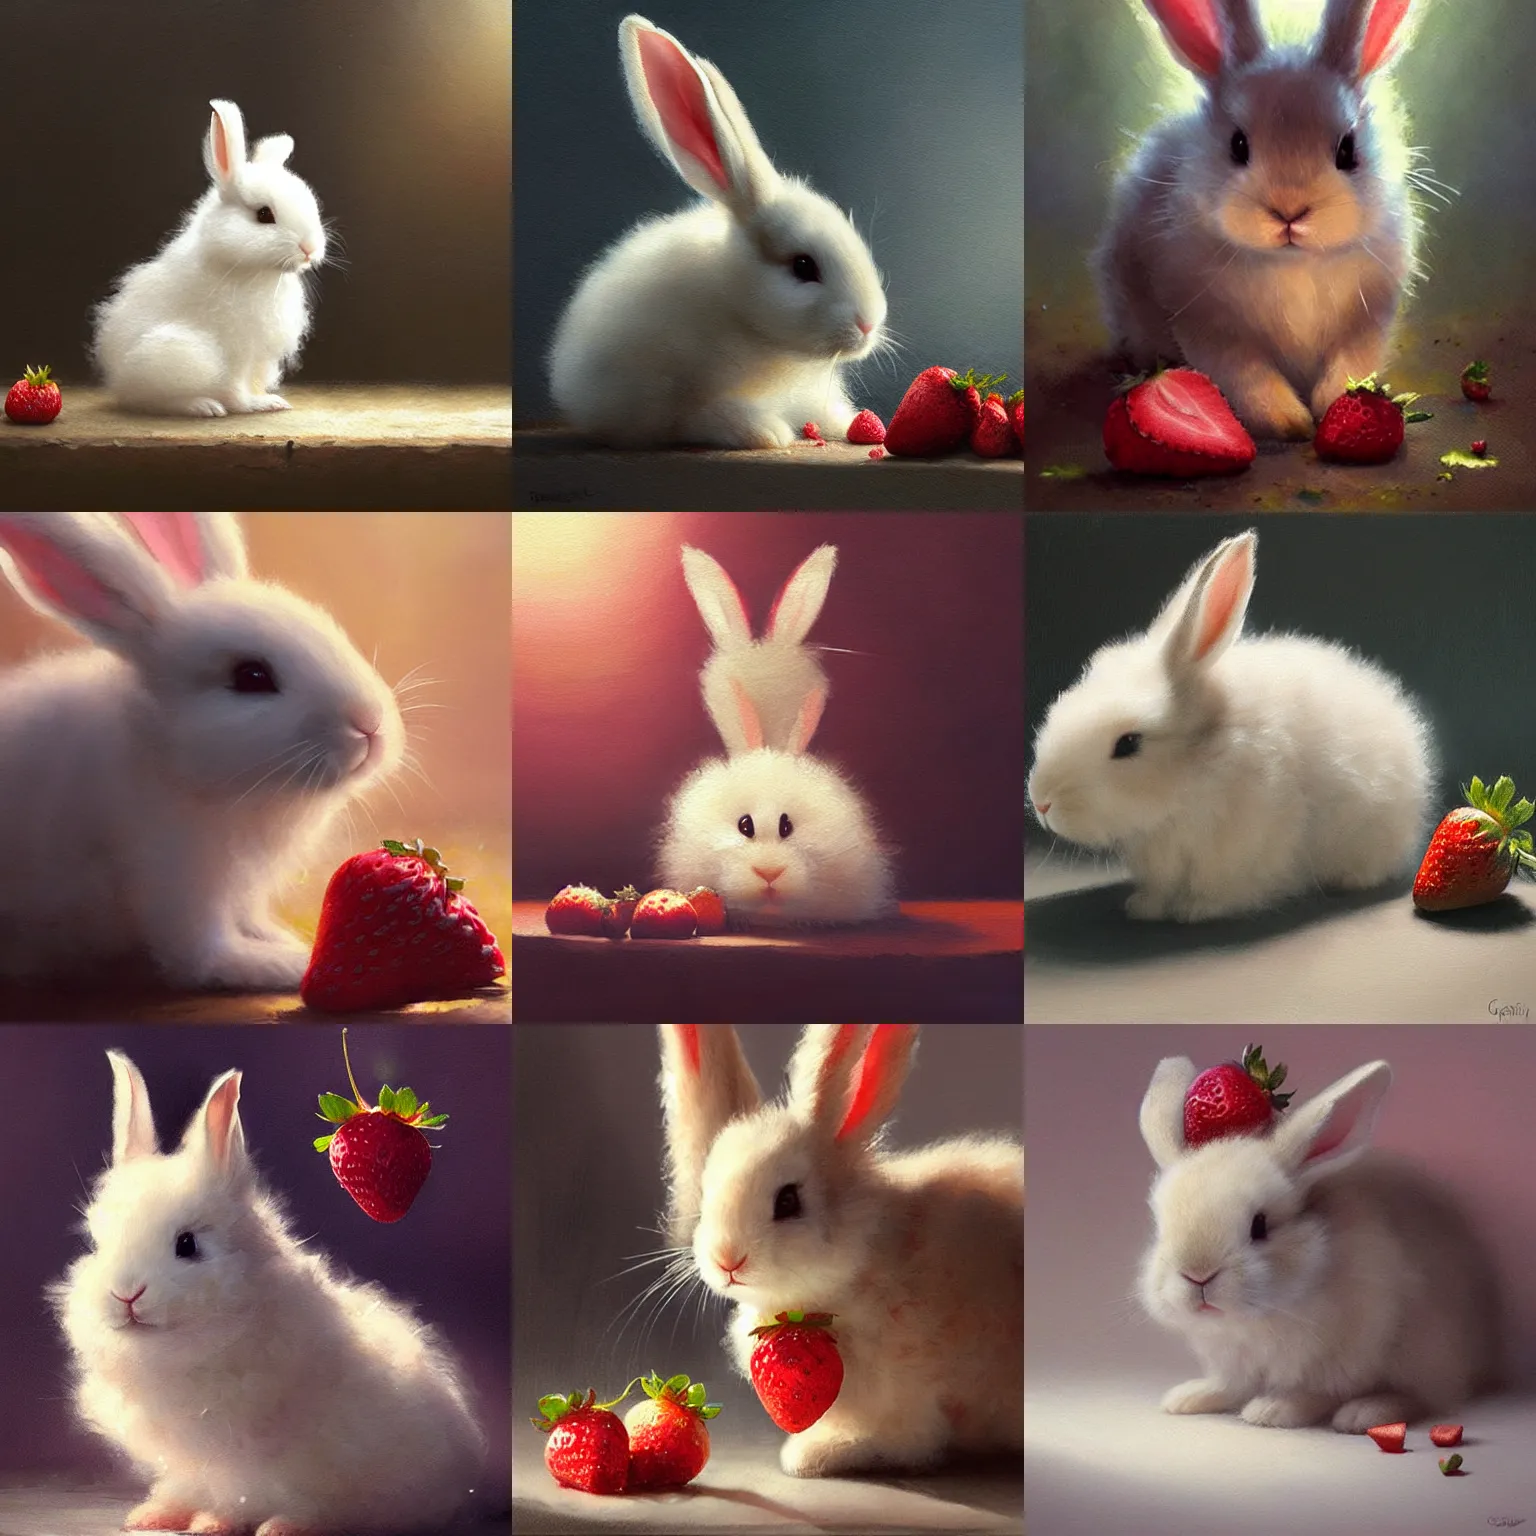 Nose Head Rabbit Live Wallpaper - free download